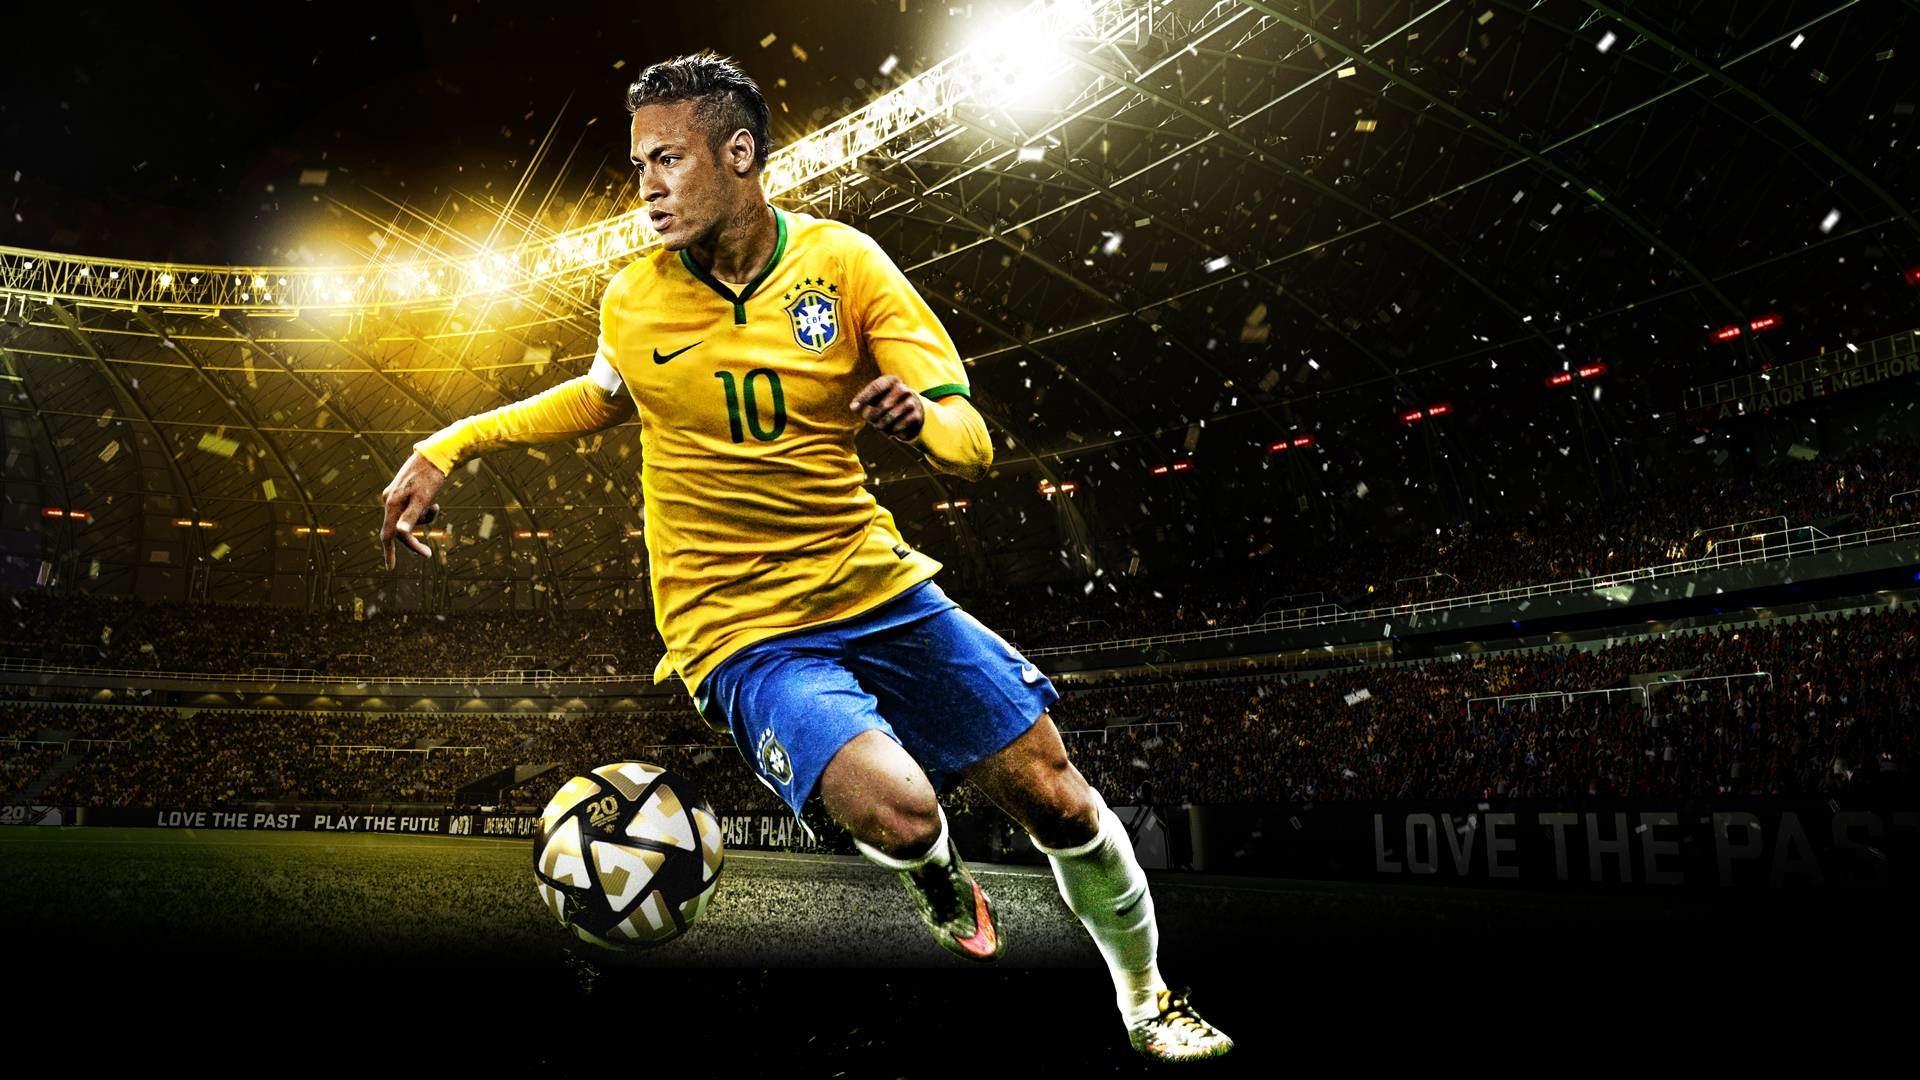 Neymar wallpaper 1920x1080 Full HD (1080p) desktop background